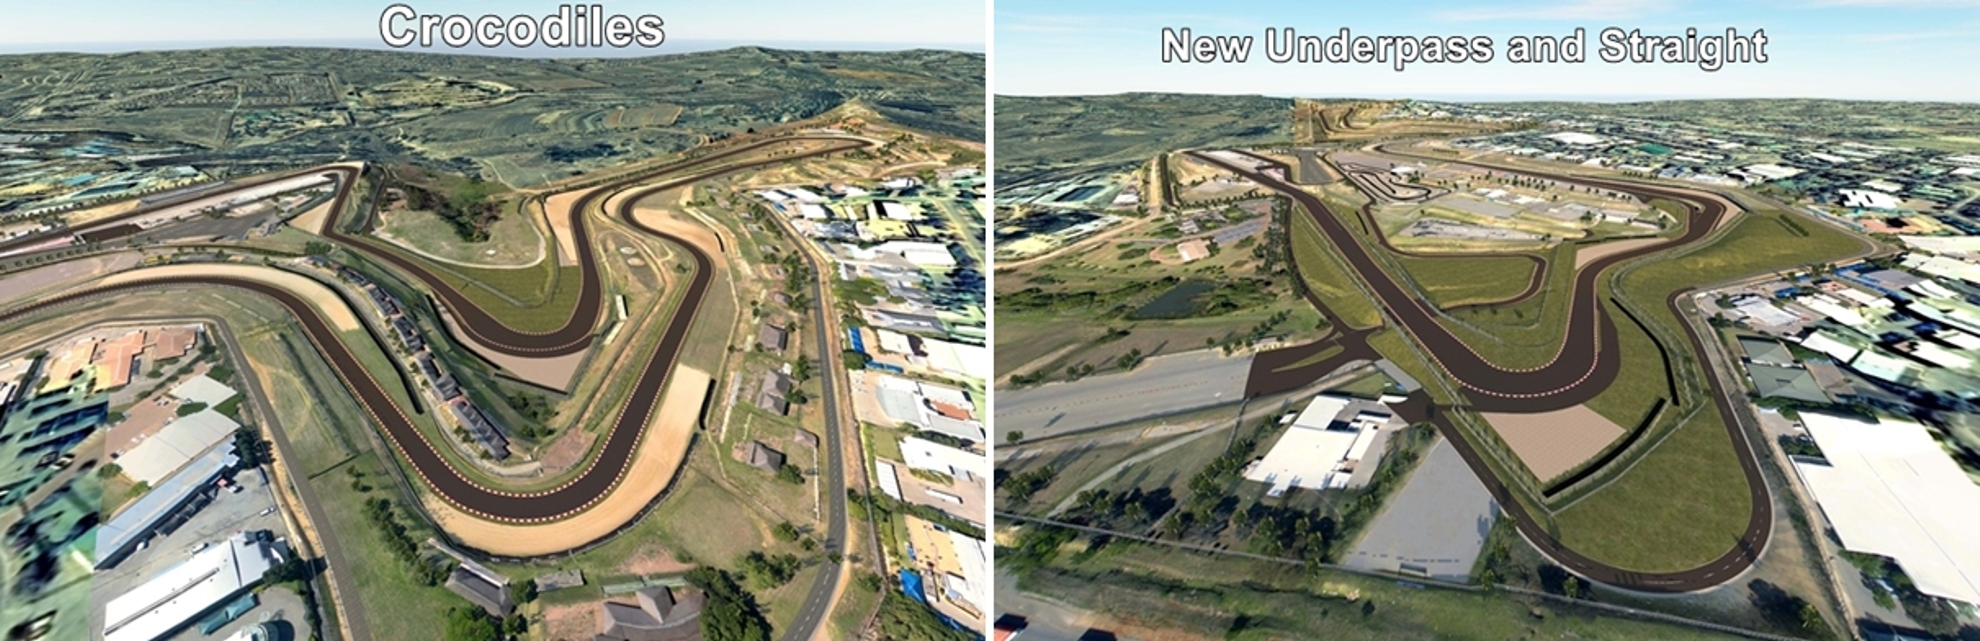 Kyalami resurfaces as top F1 Grand Prix racing circuit in South Africa